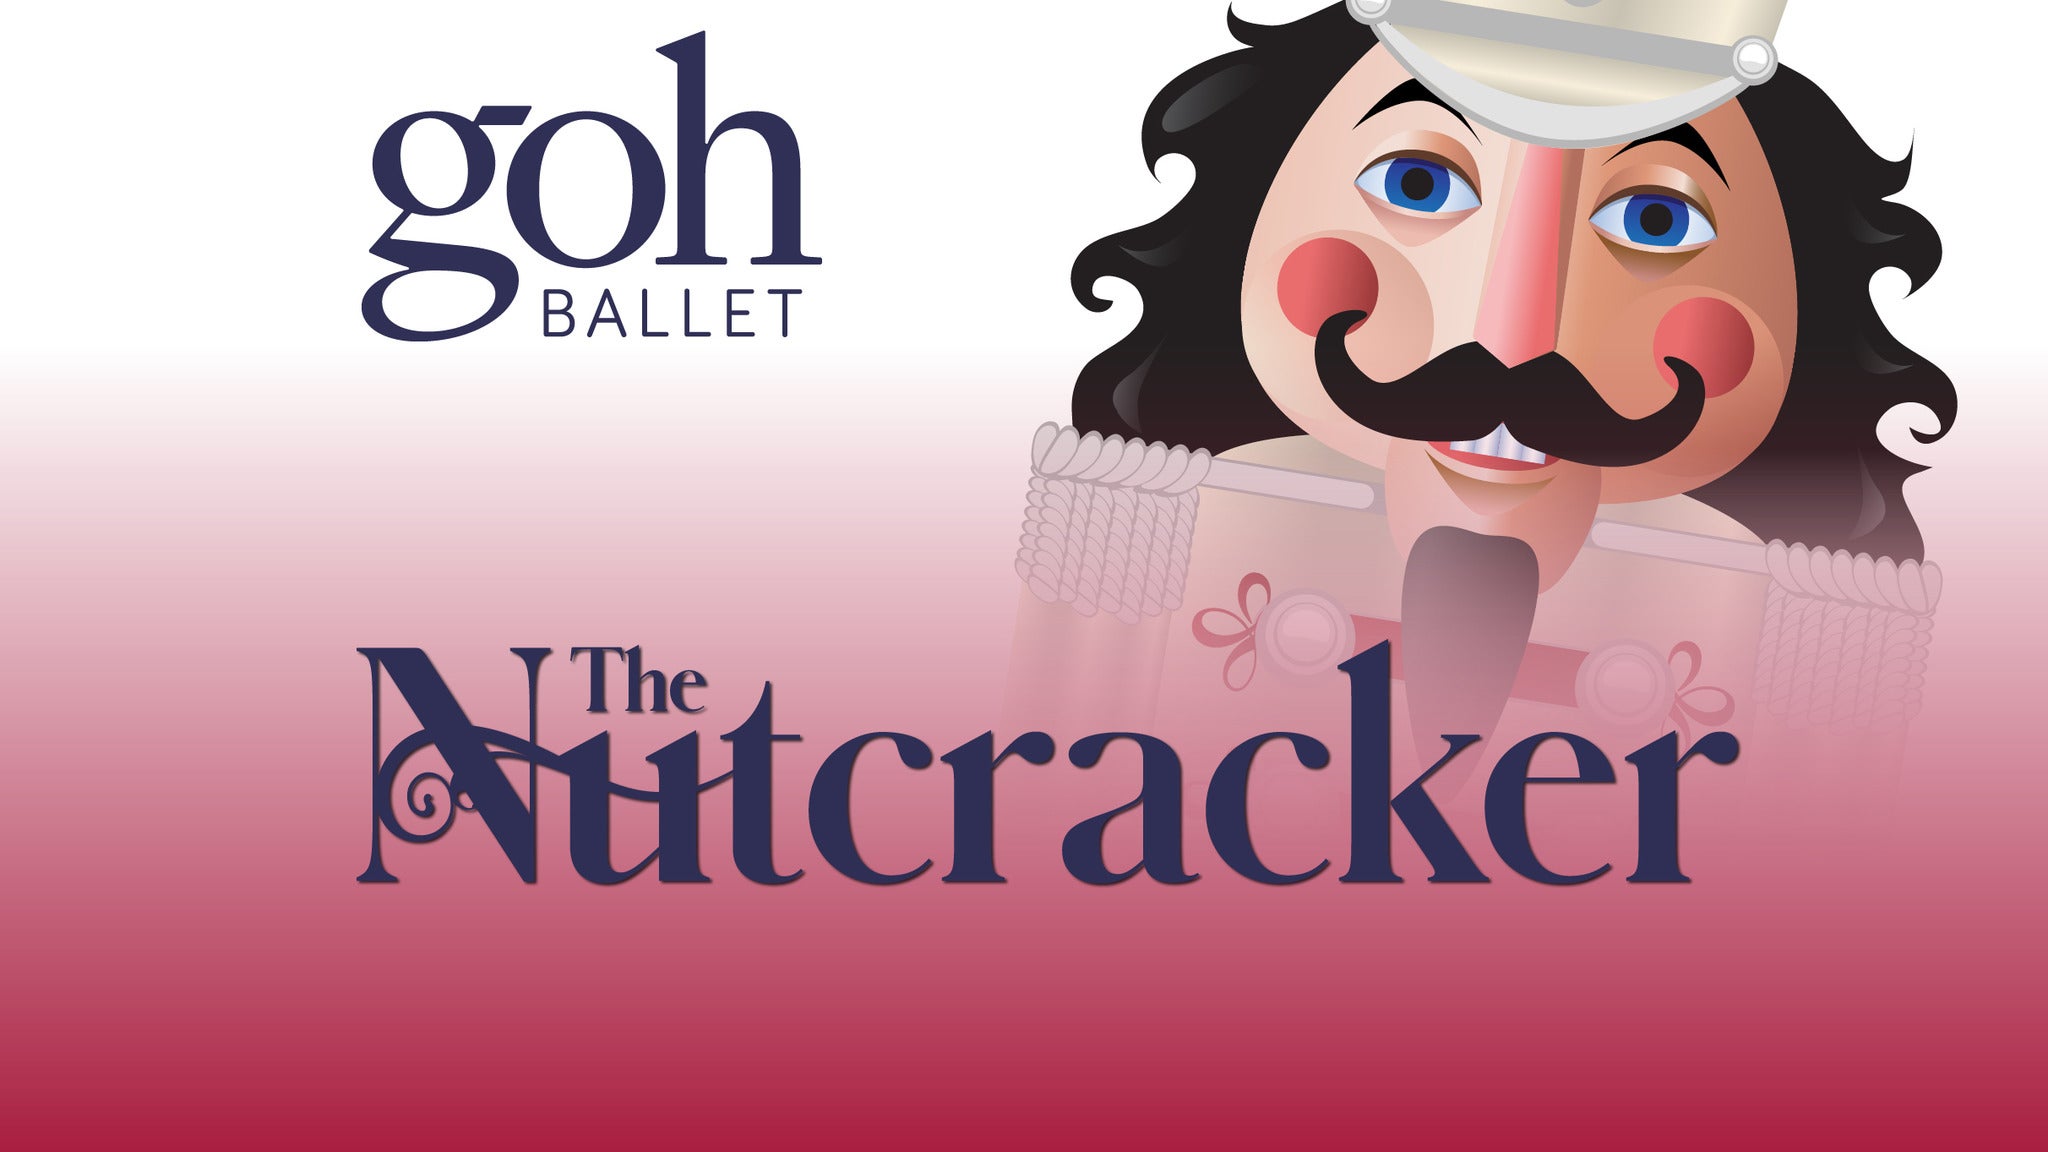 The Nutcracker - GOH Ballet tickets